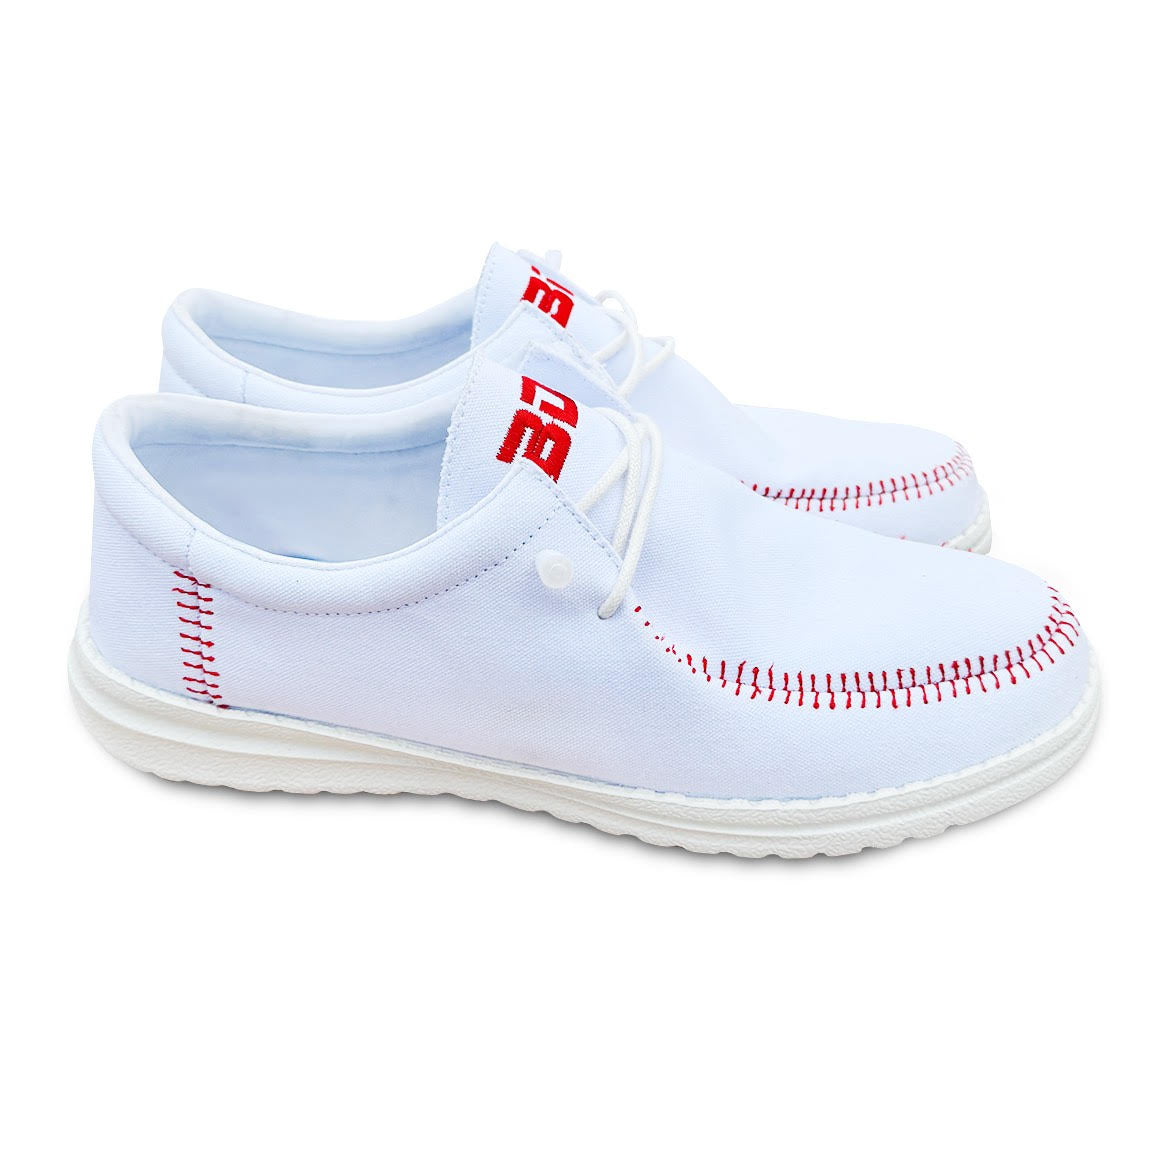 Baseball Stitched Casual Canvas Shoe